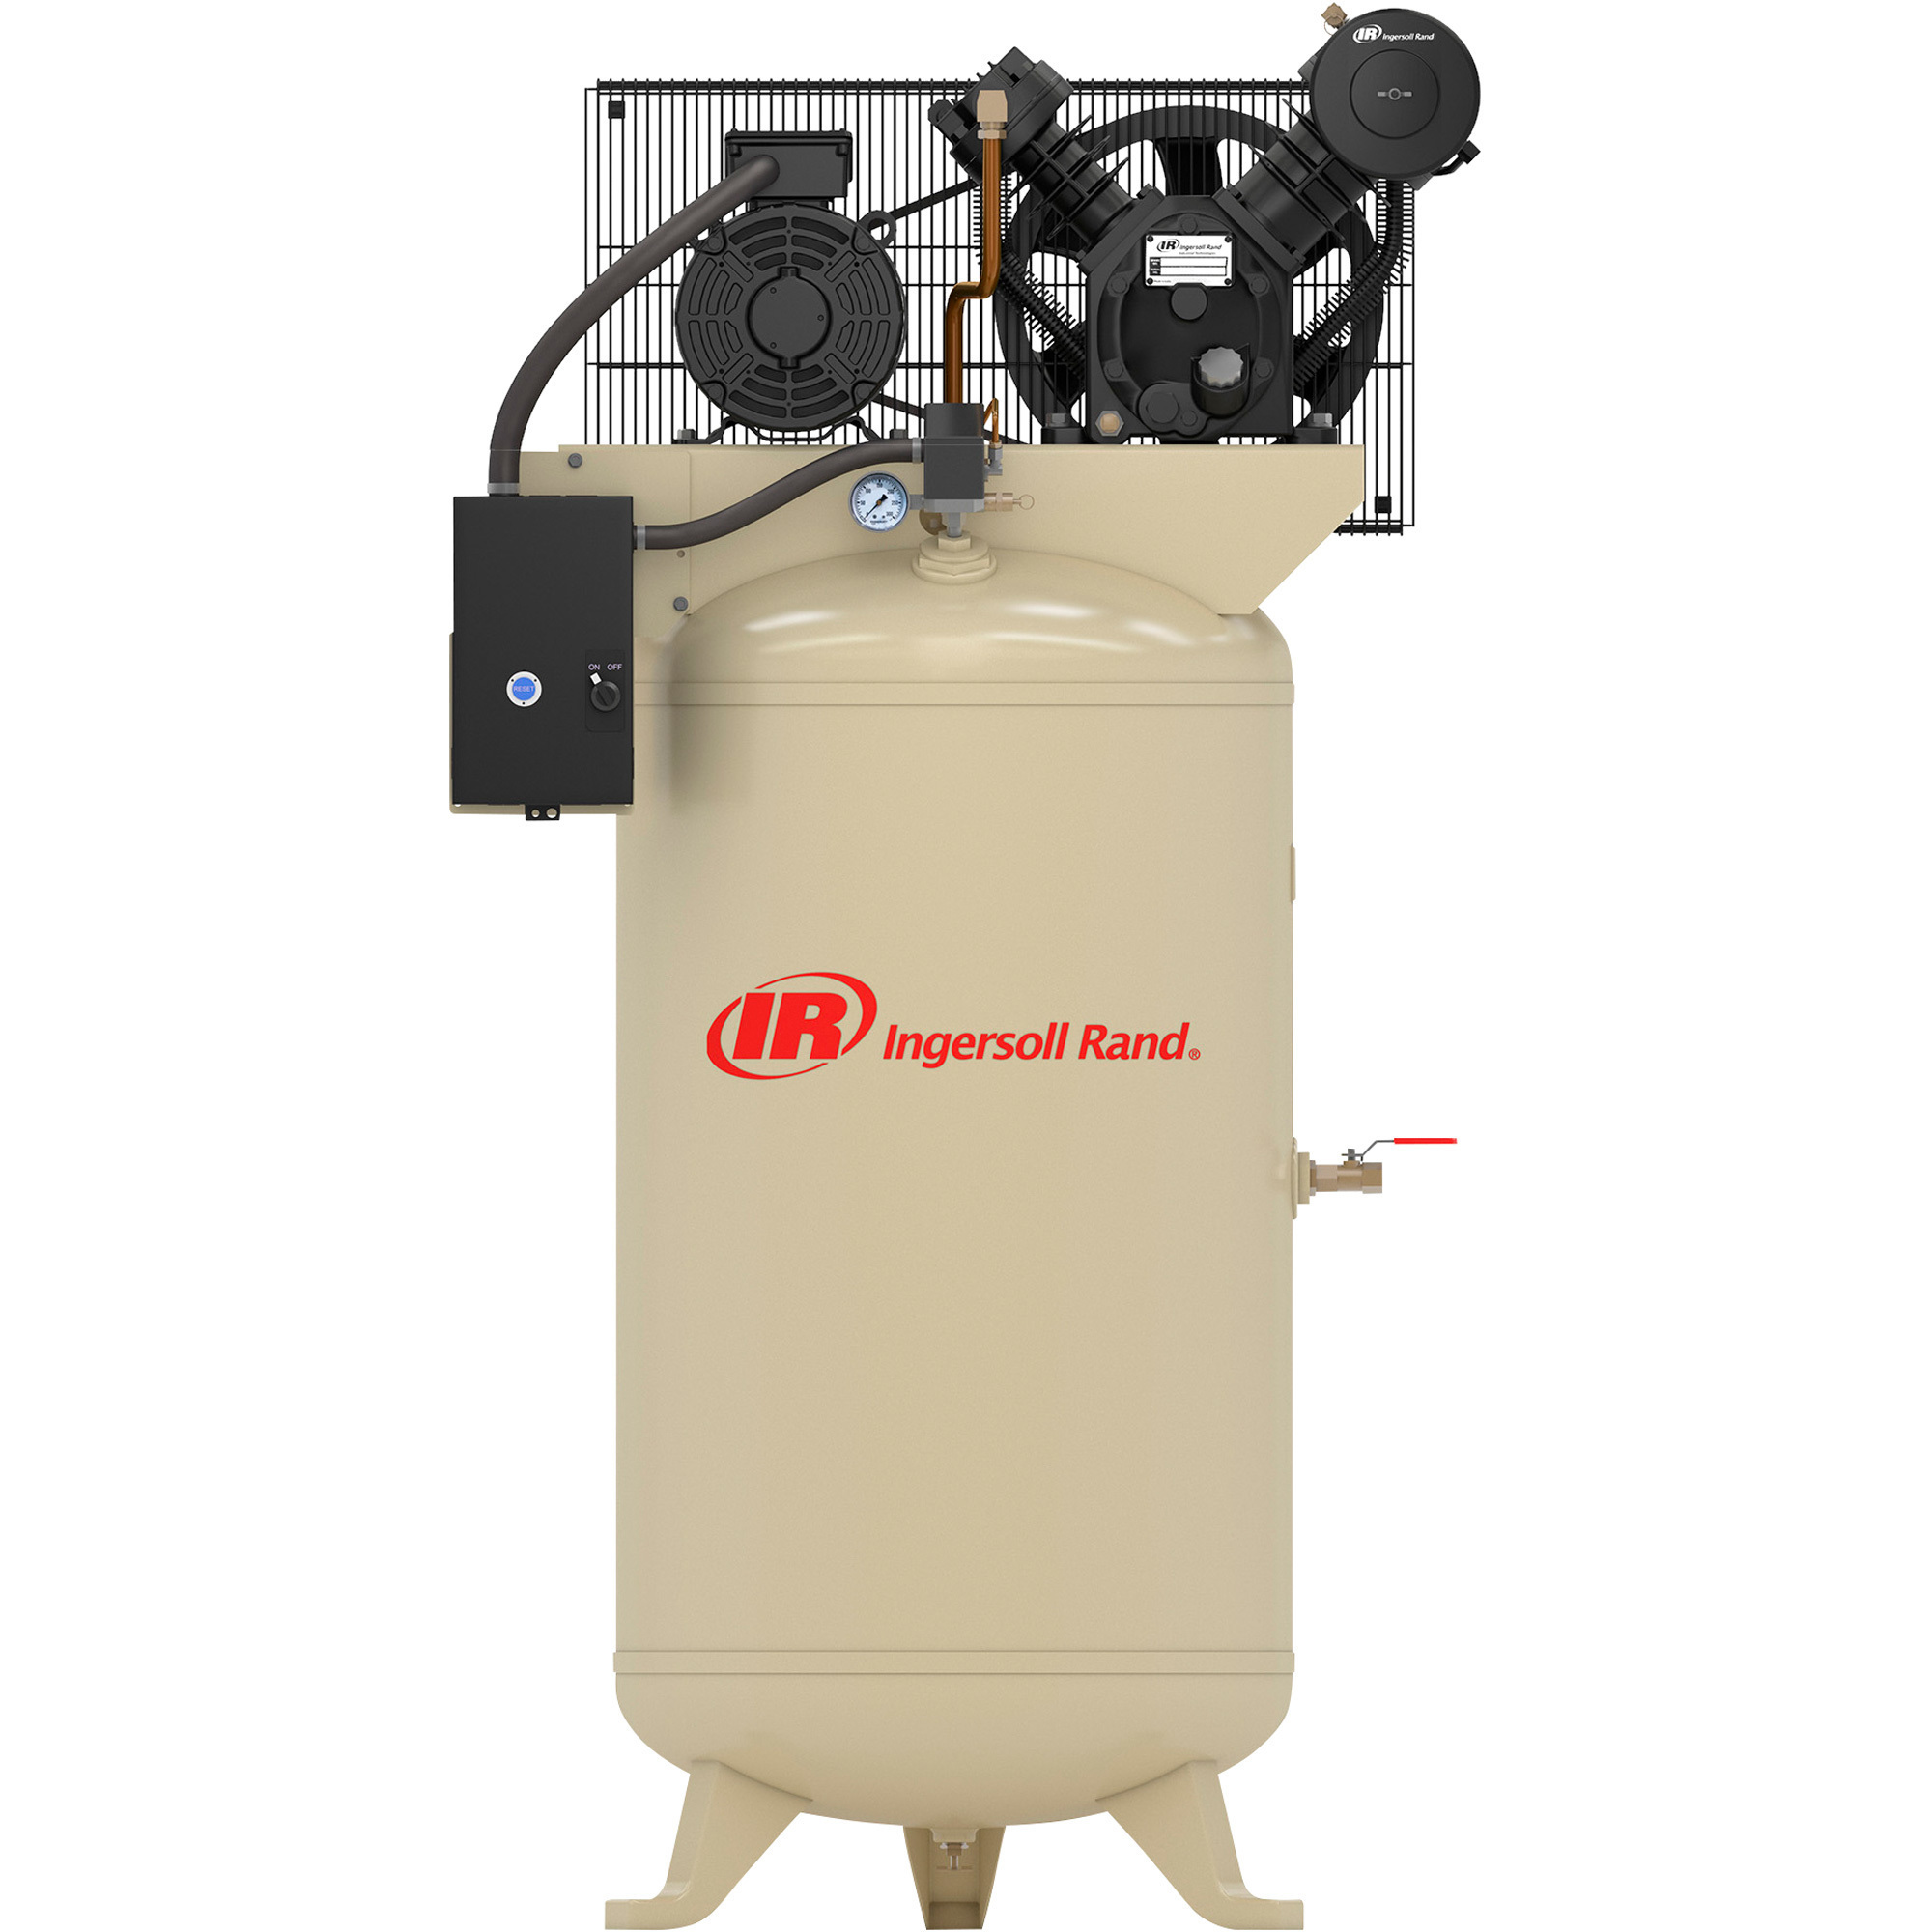 Ingersoll Rand Type-30 Reciprocating Air Compressor, 5 HP, 200 Volt, 3 Phase, 80 Gallon, Model 2340N5-V